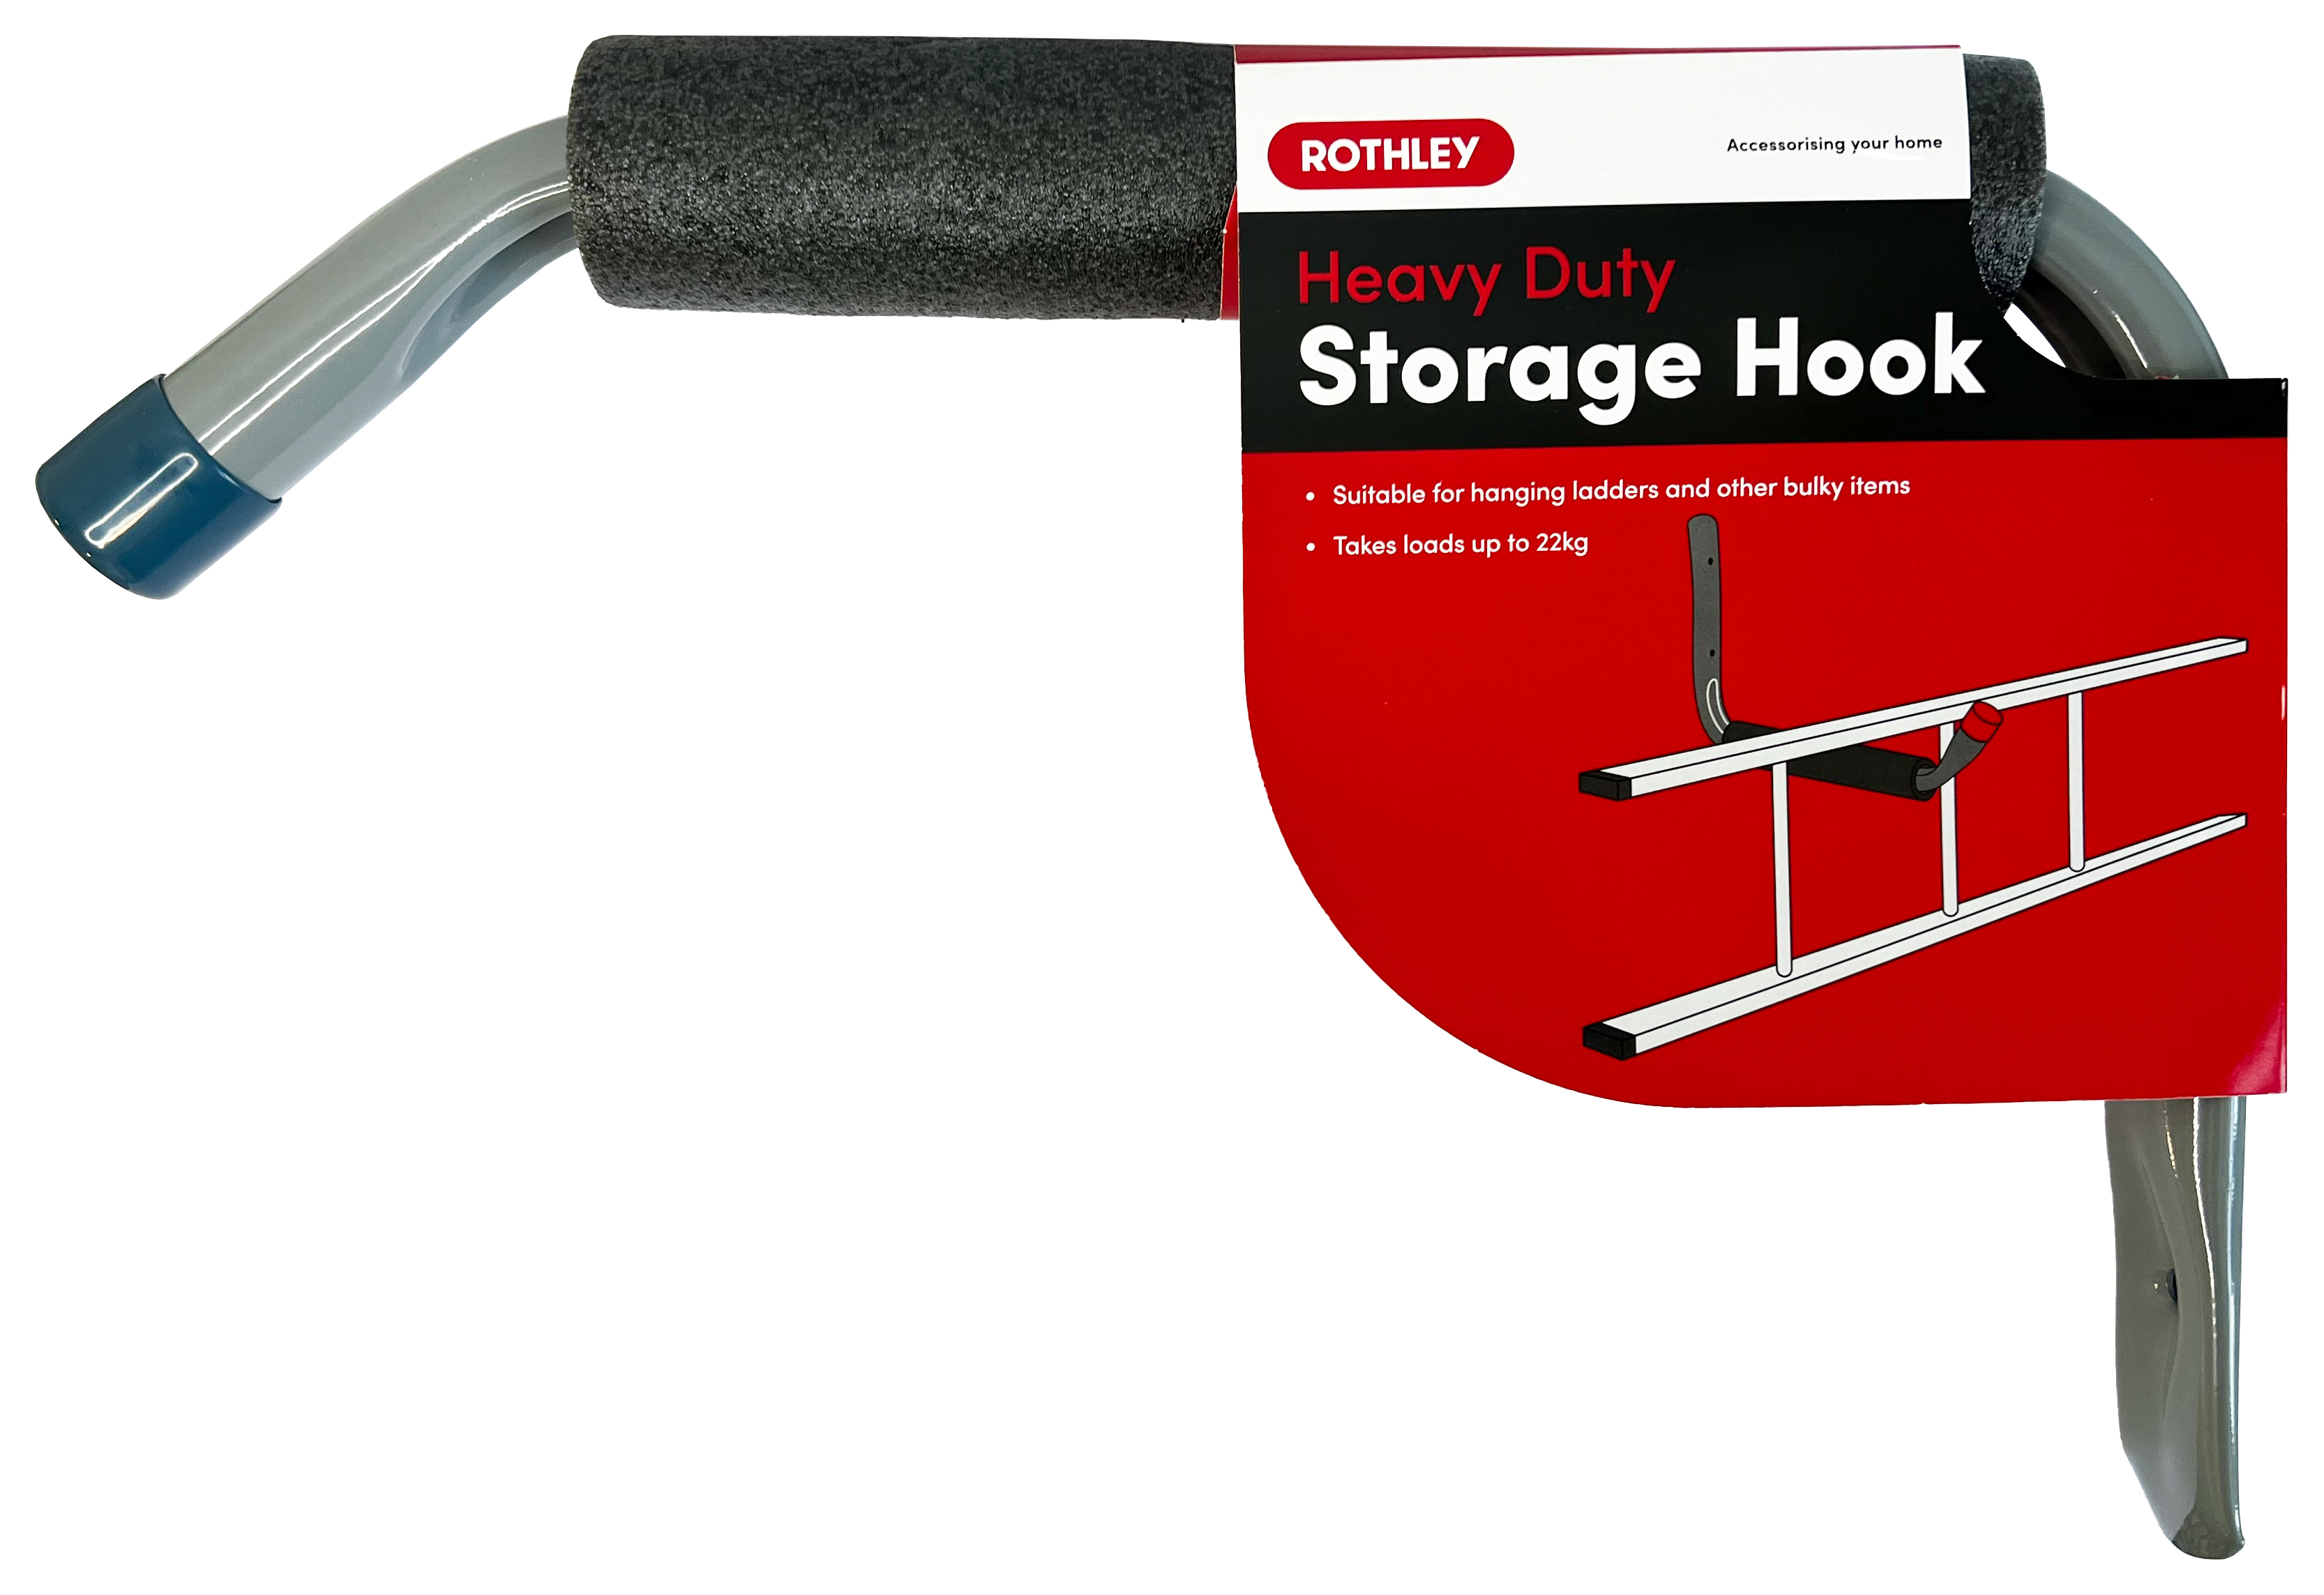 Image of Rothley Heavy Duty Storage Hook